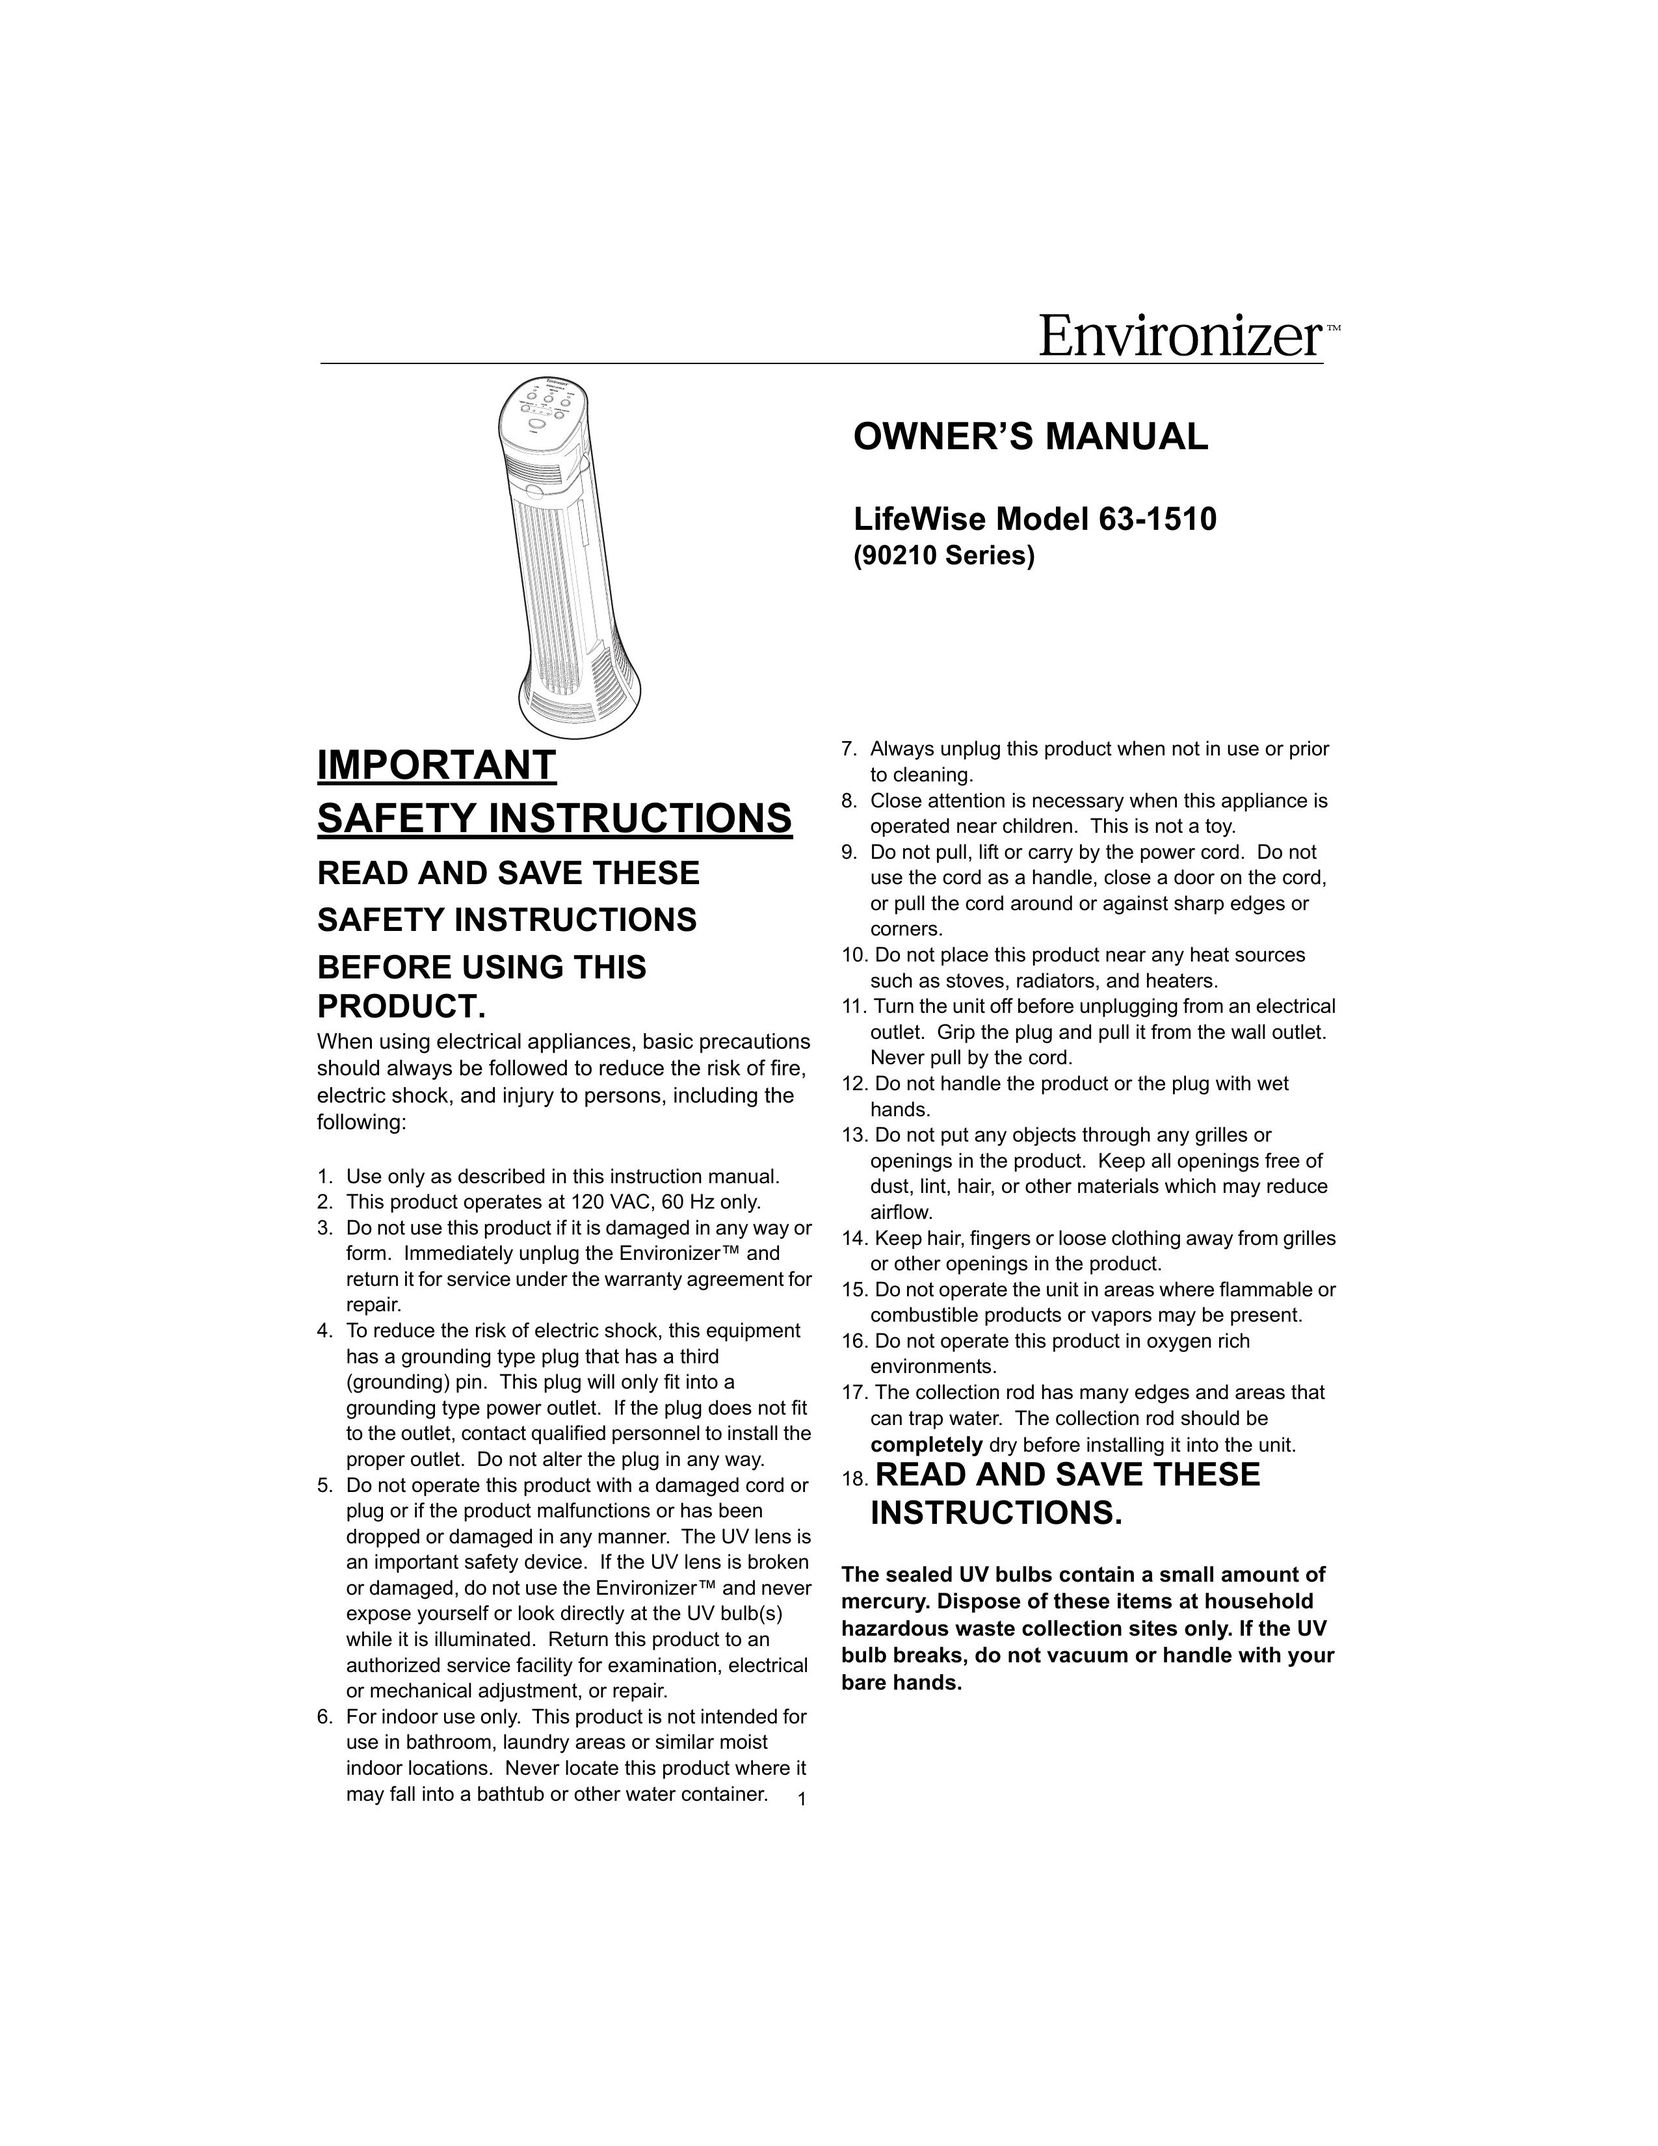 LifeWise 63-1510 Air Cleaner User Manual